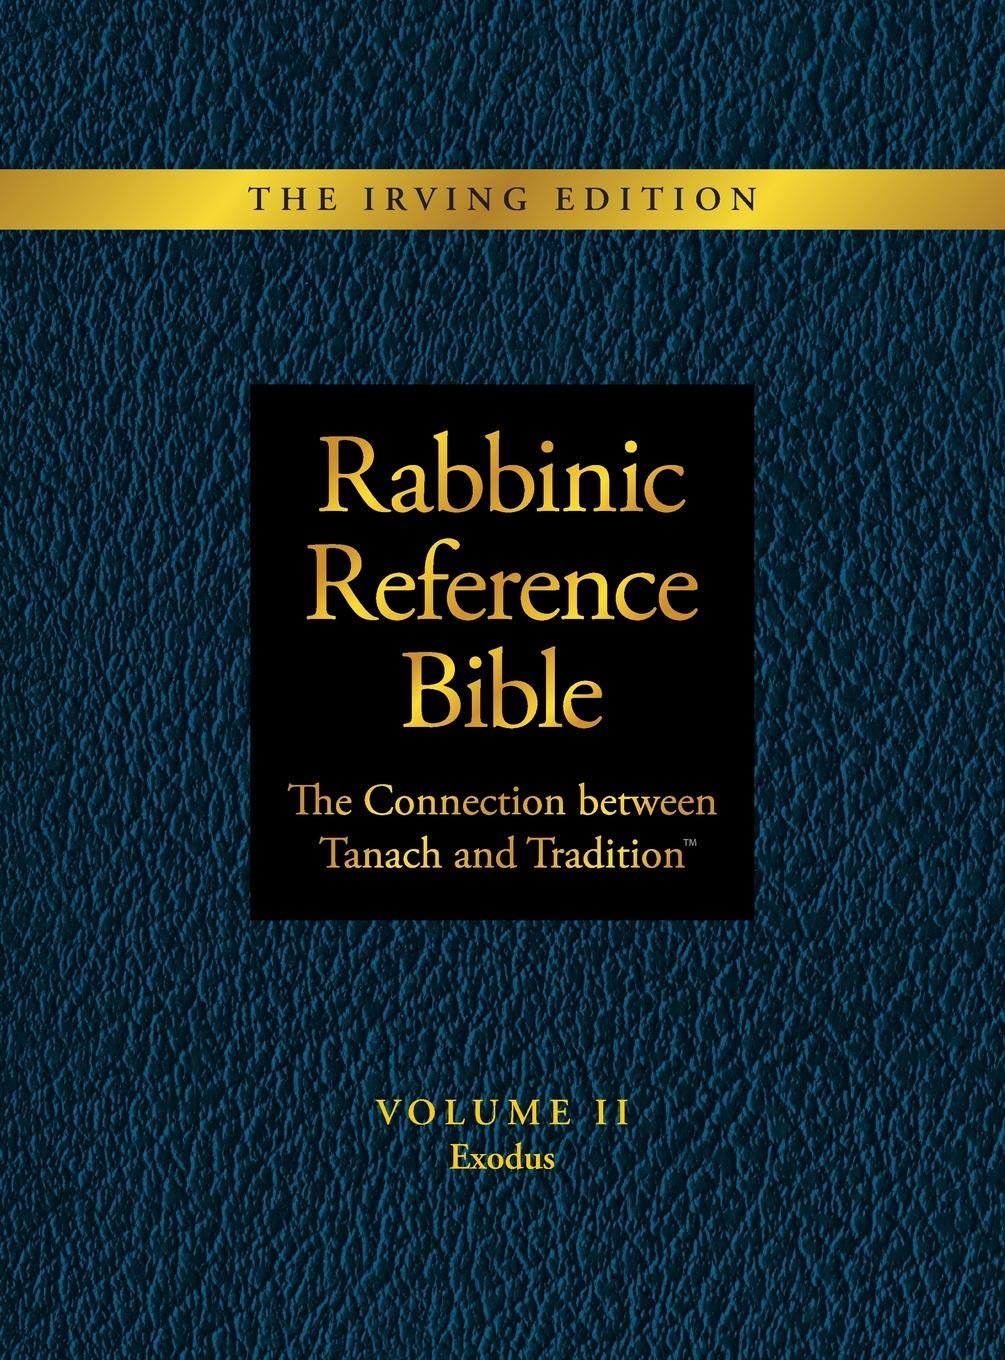 Rabbinic Reference Bible, vol.2 Exodus